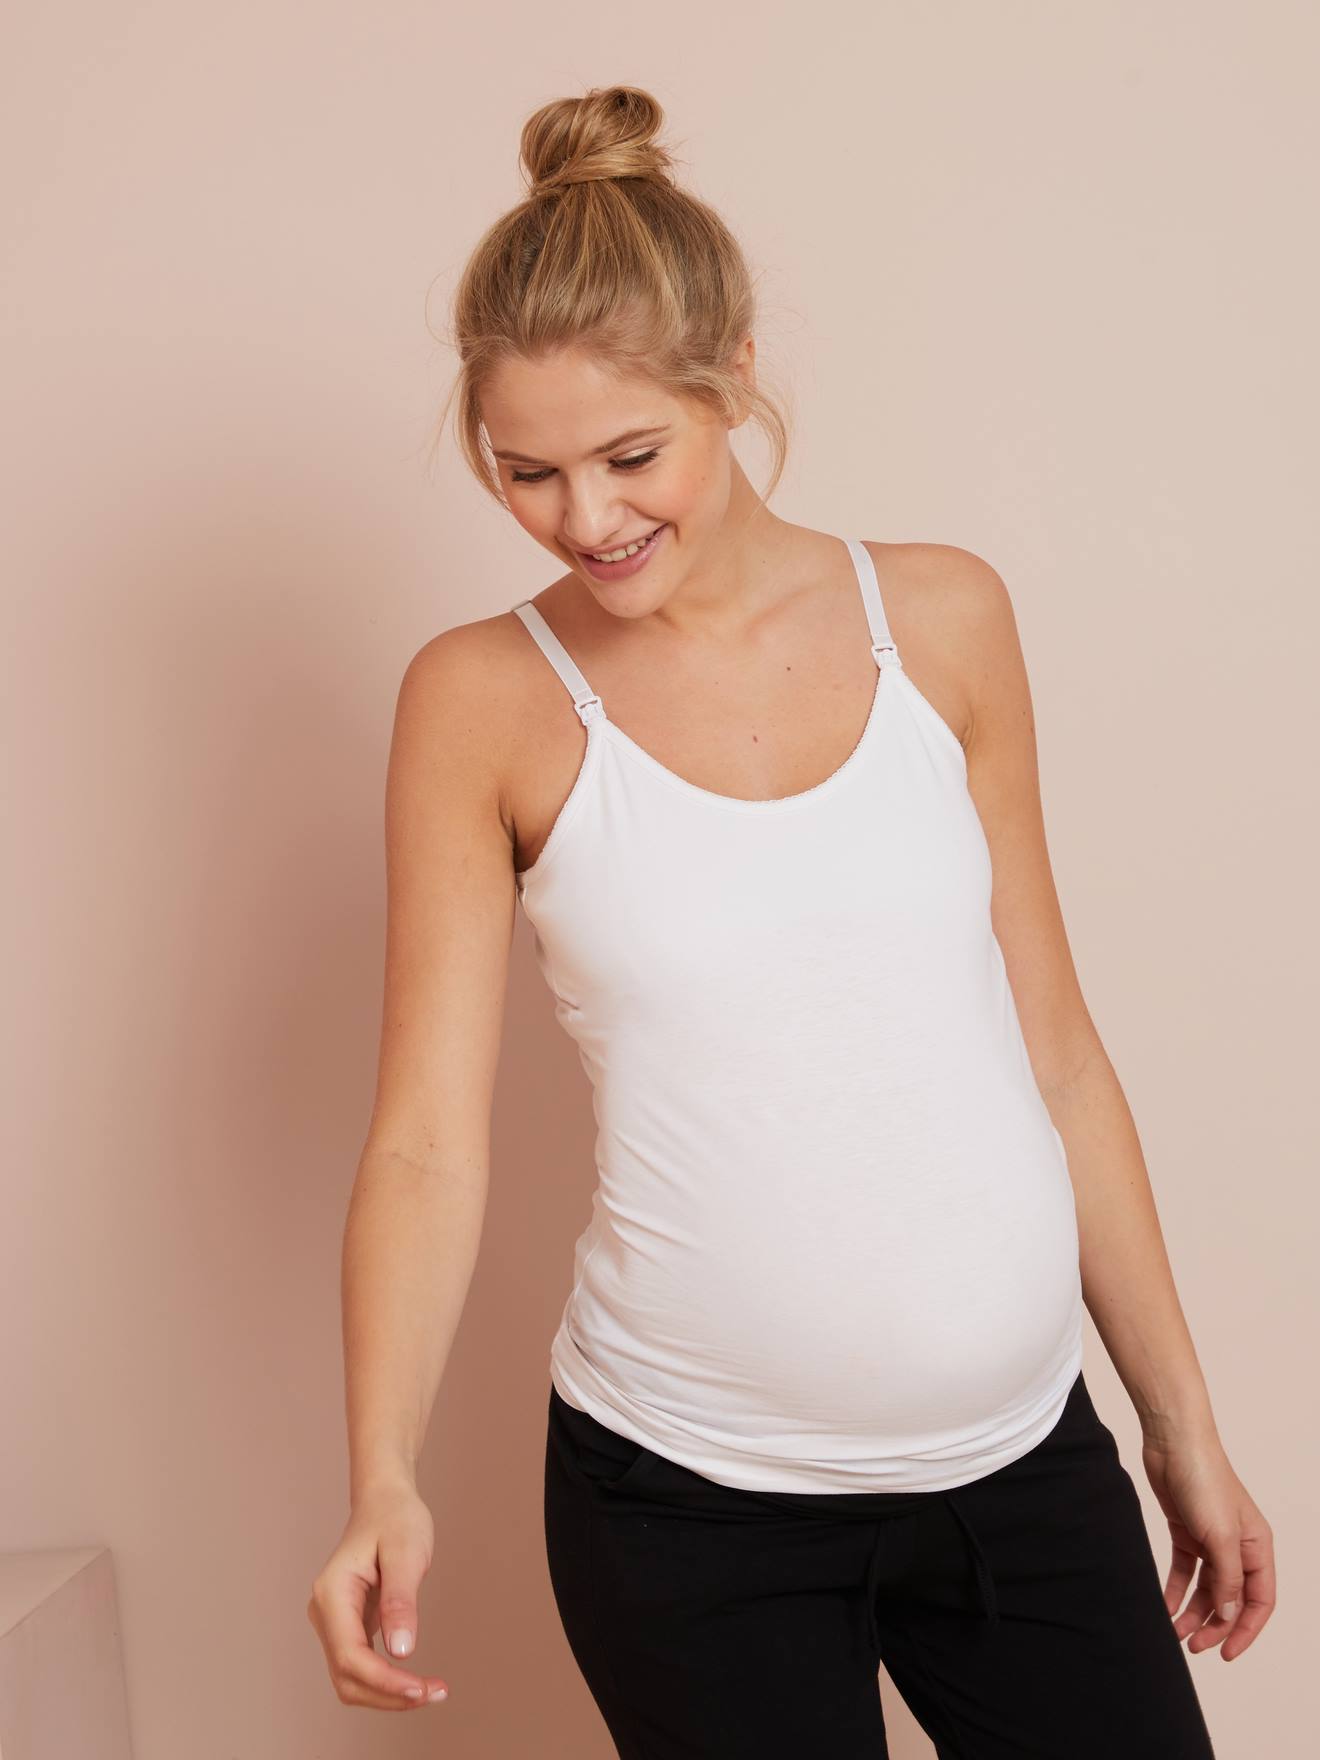 GUCIStyle Ropa Embarazadas Camiseta Premama Lactancia Mujeres Maternidad Lactancia Materna Lisonjero Verano Camiseta 